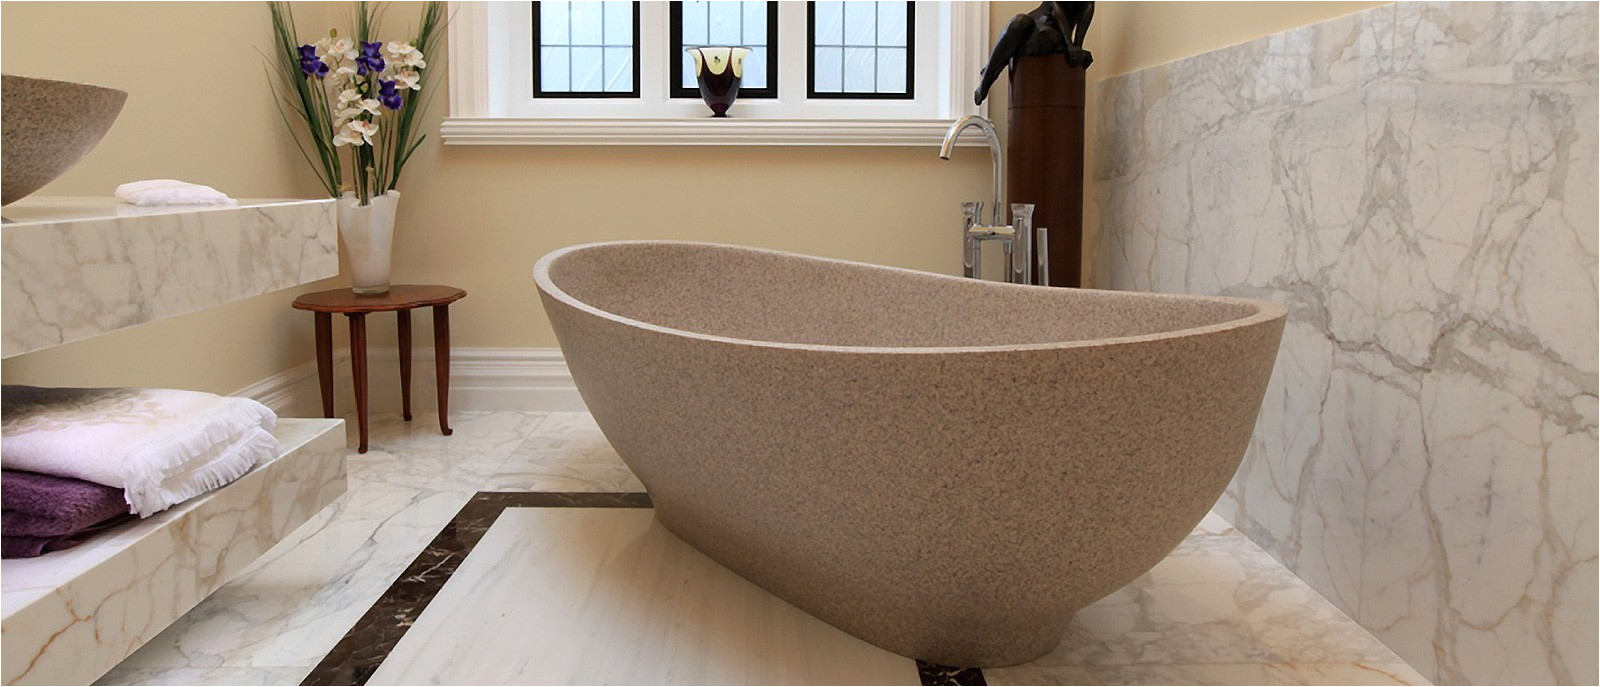 Luxury Stone Bathtubs Luxury Freestanding Baths